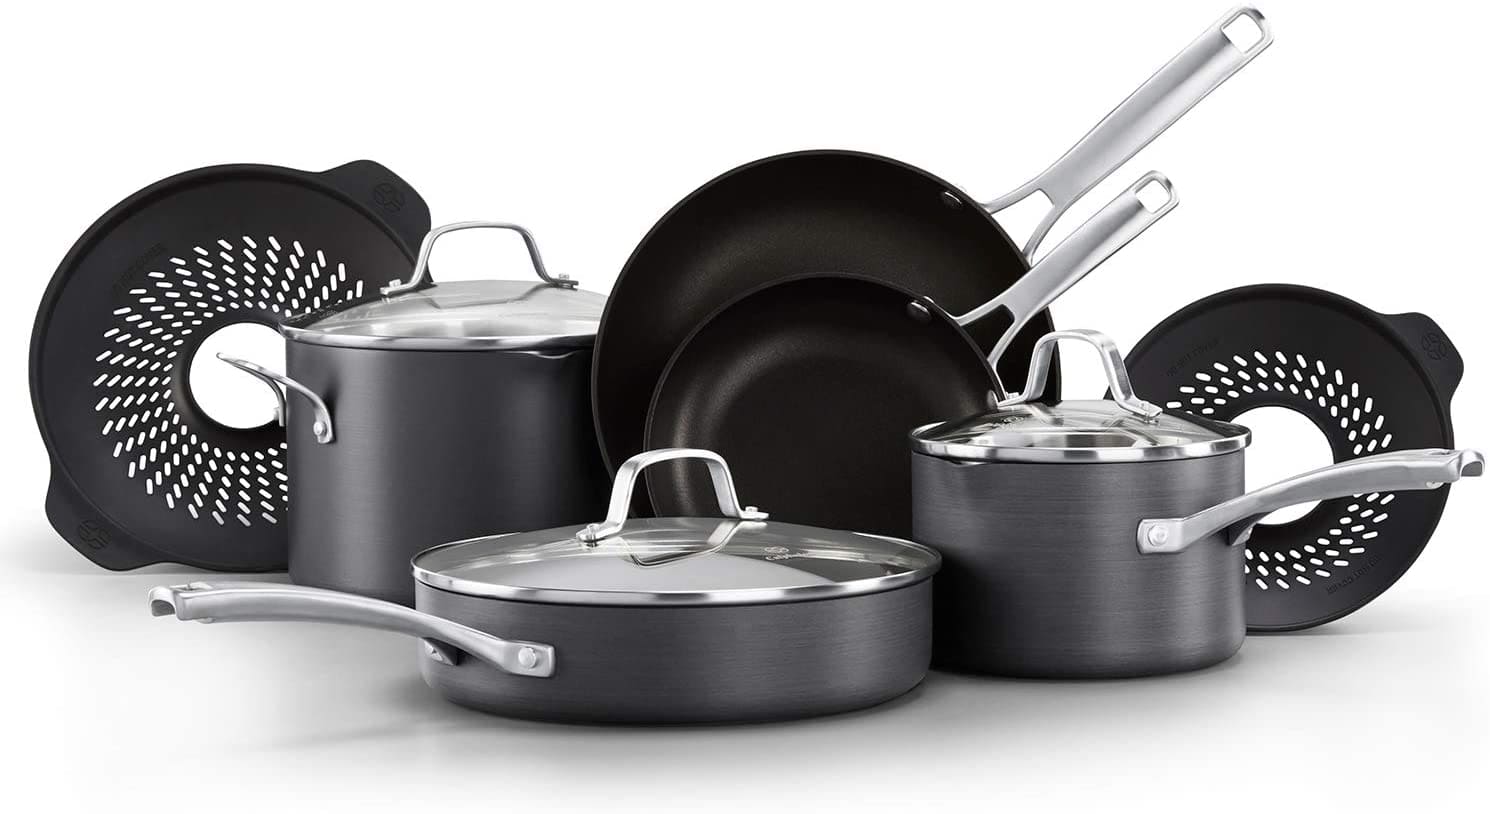 calphalon classic pots and pans set, 10-piece nonstick cookware set